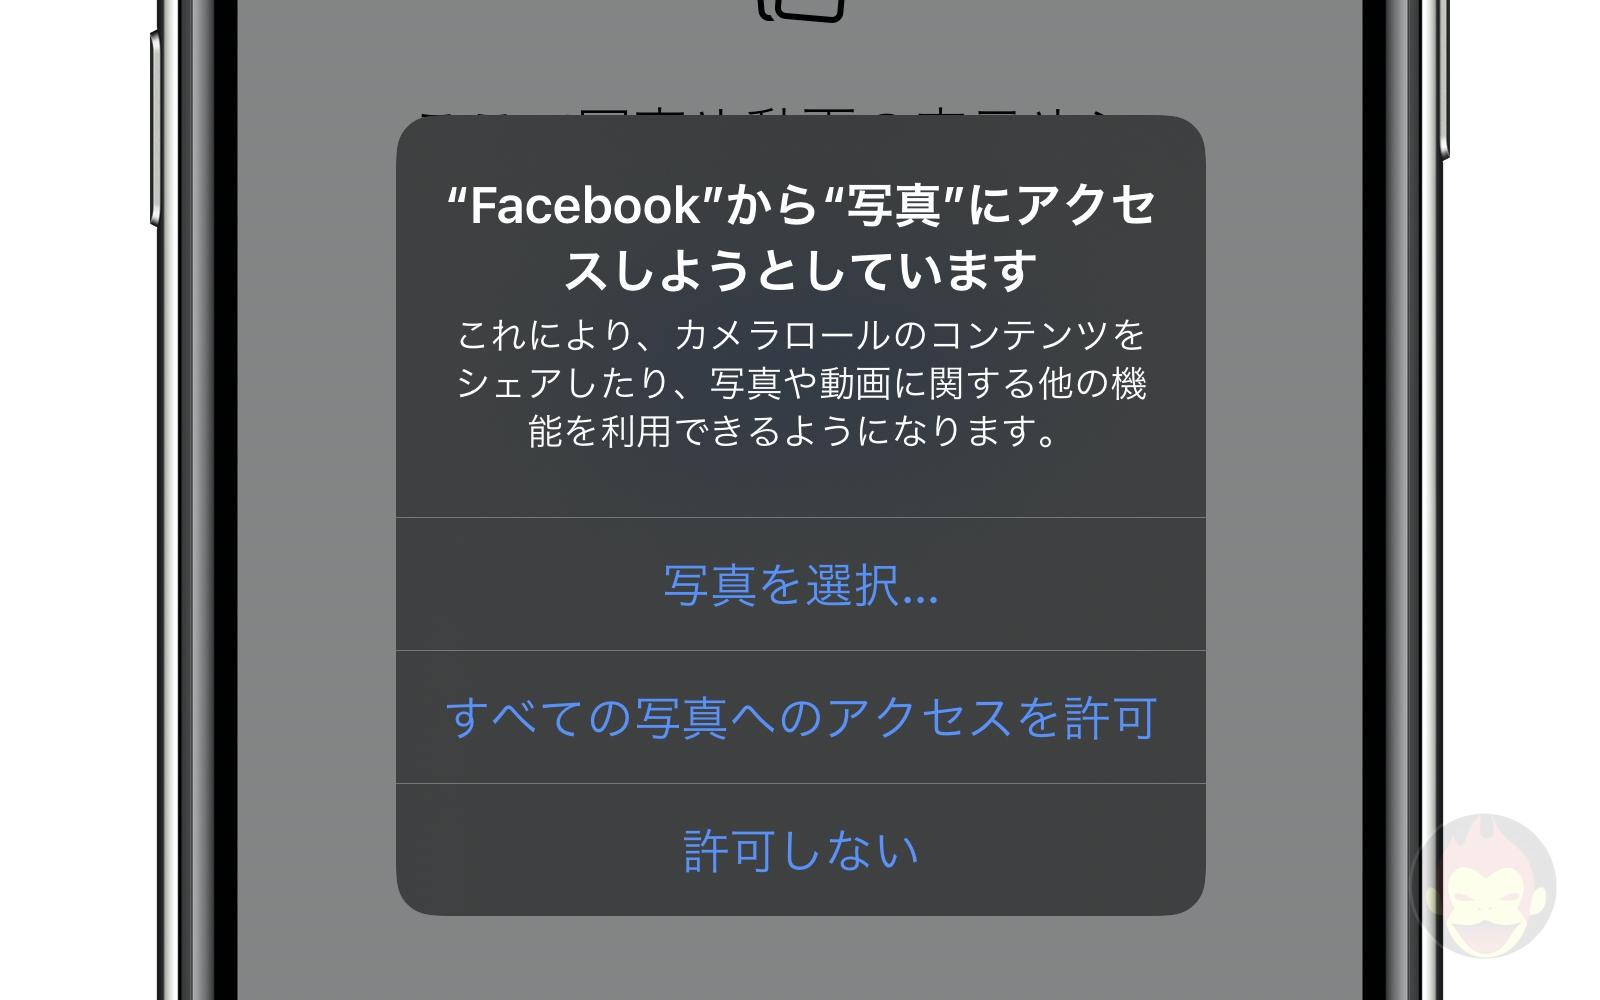 iOS14-photo-access-privacy-settings-04.jpg